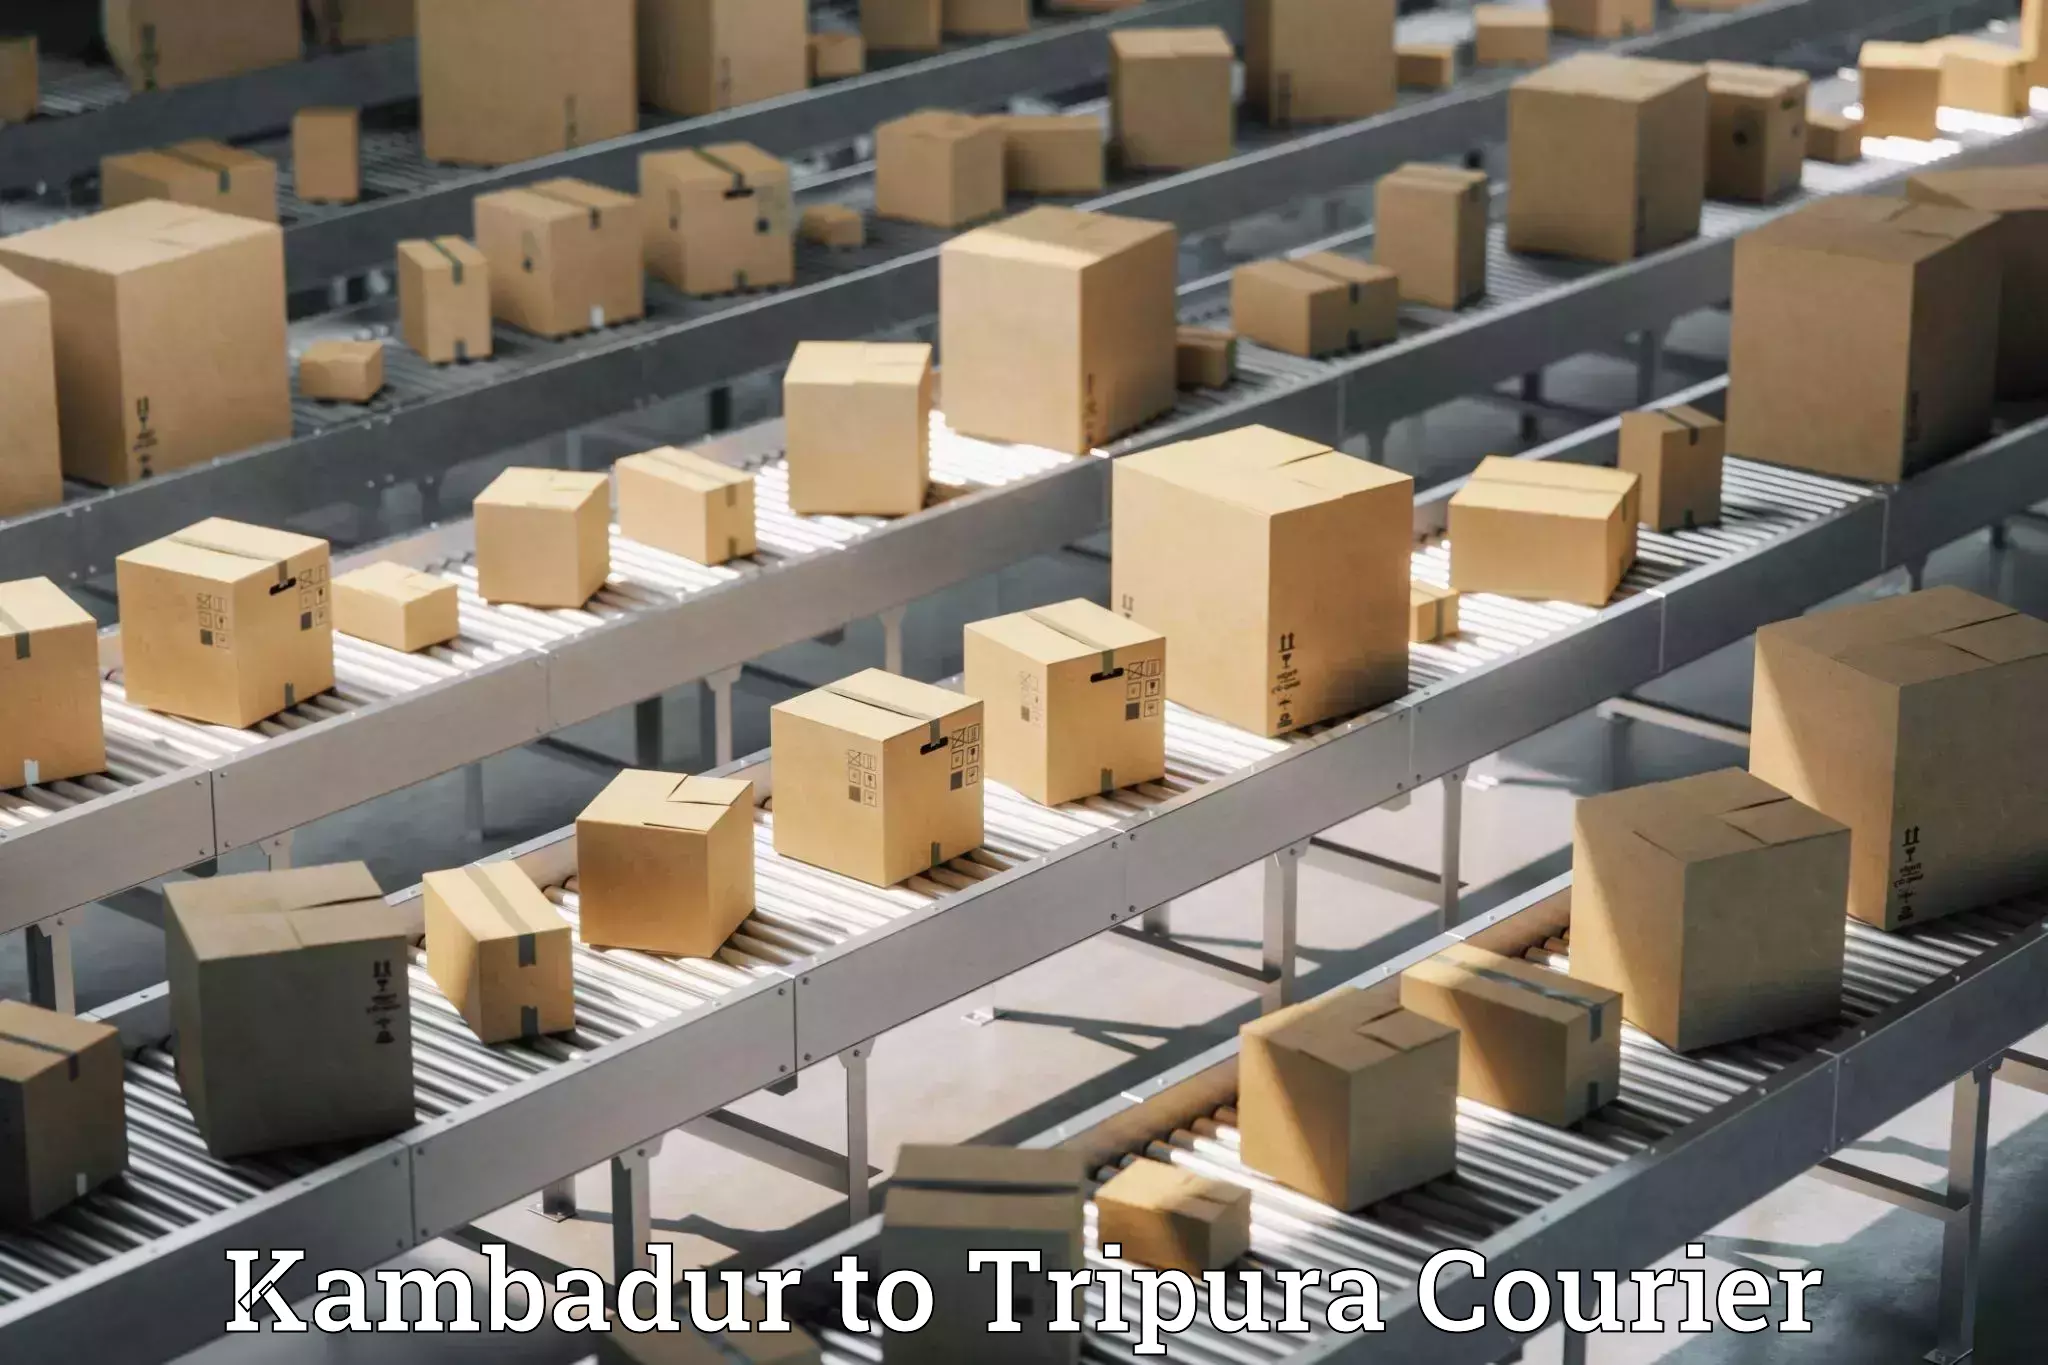 State-of-the-art courier technology Kambadur to Sonamura